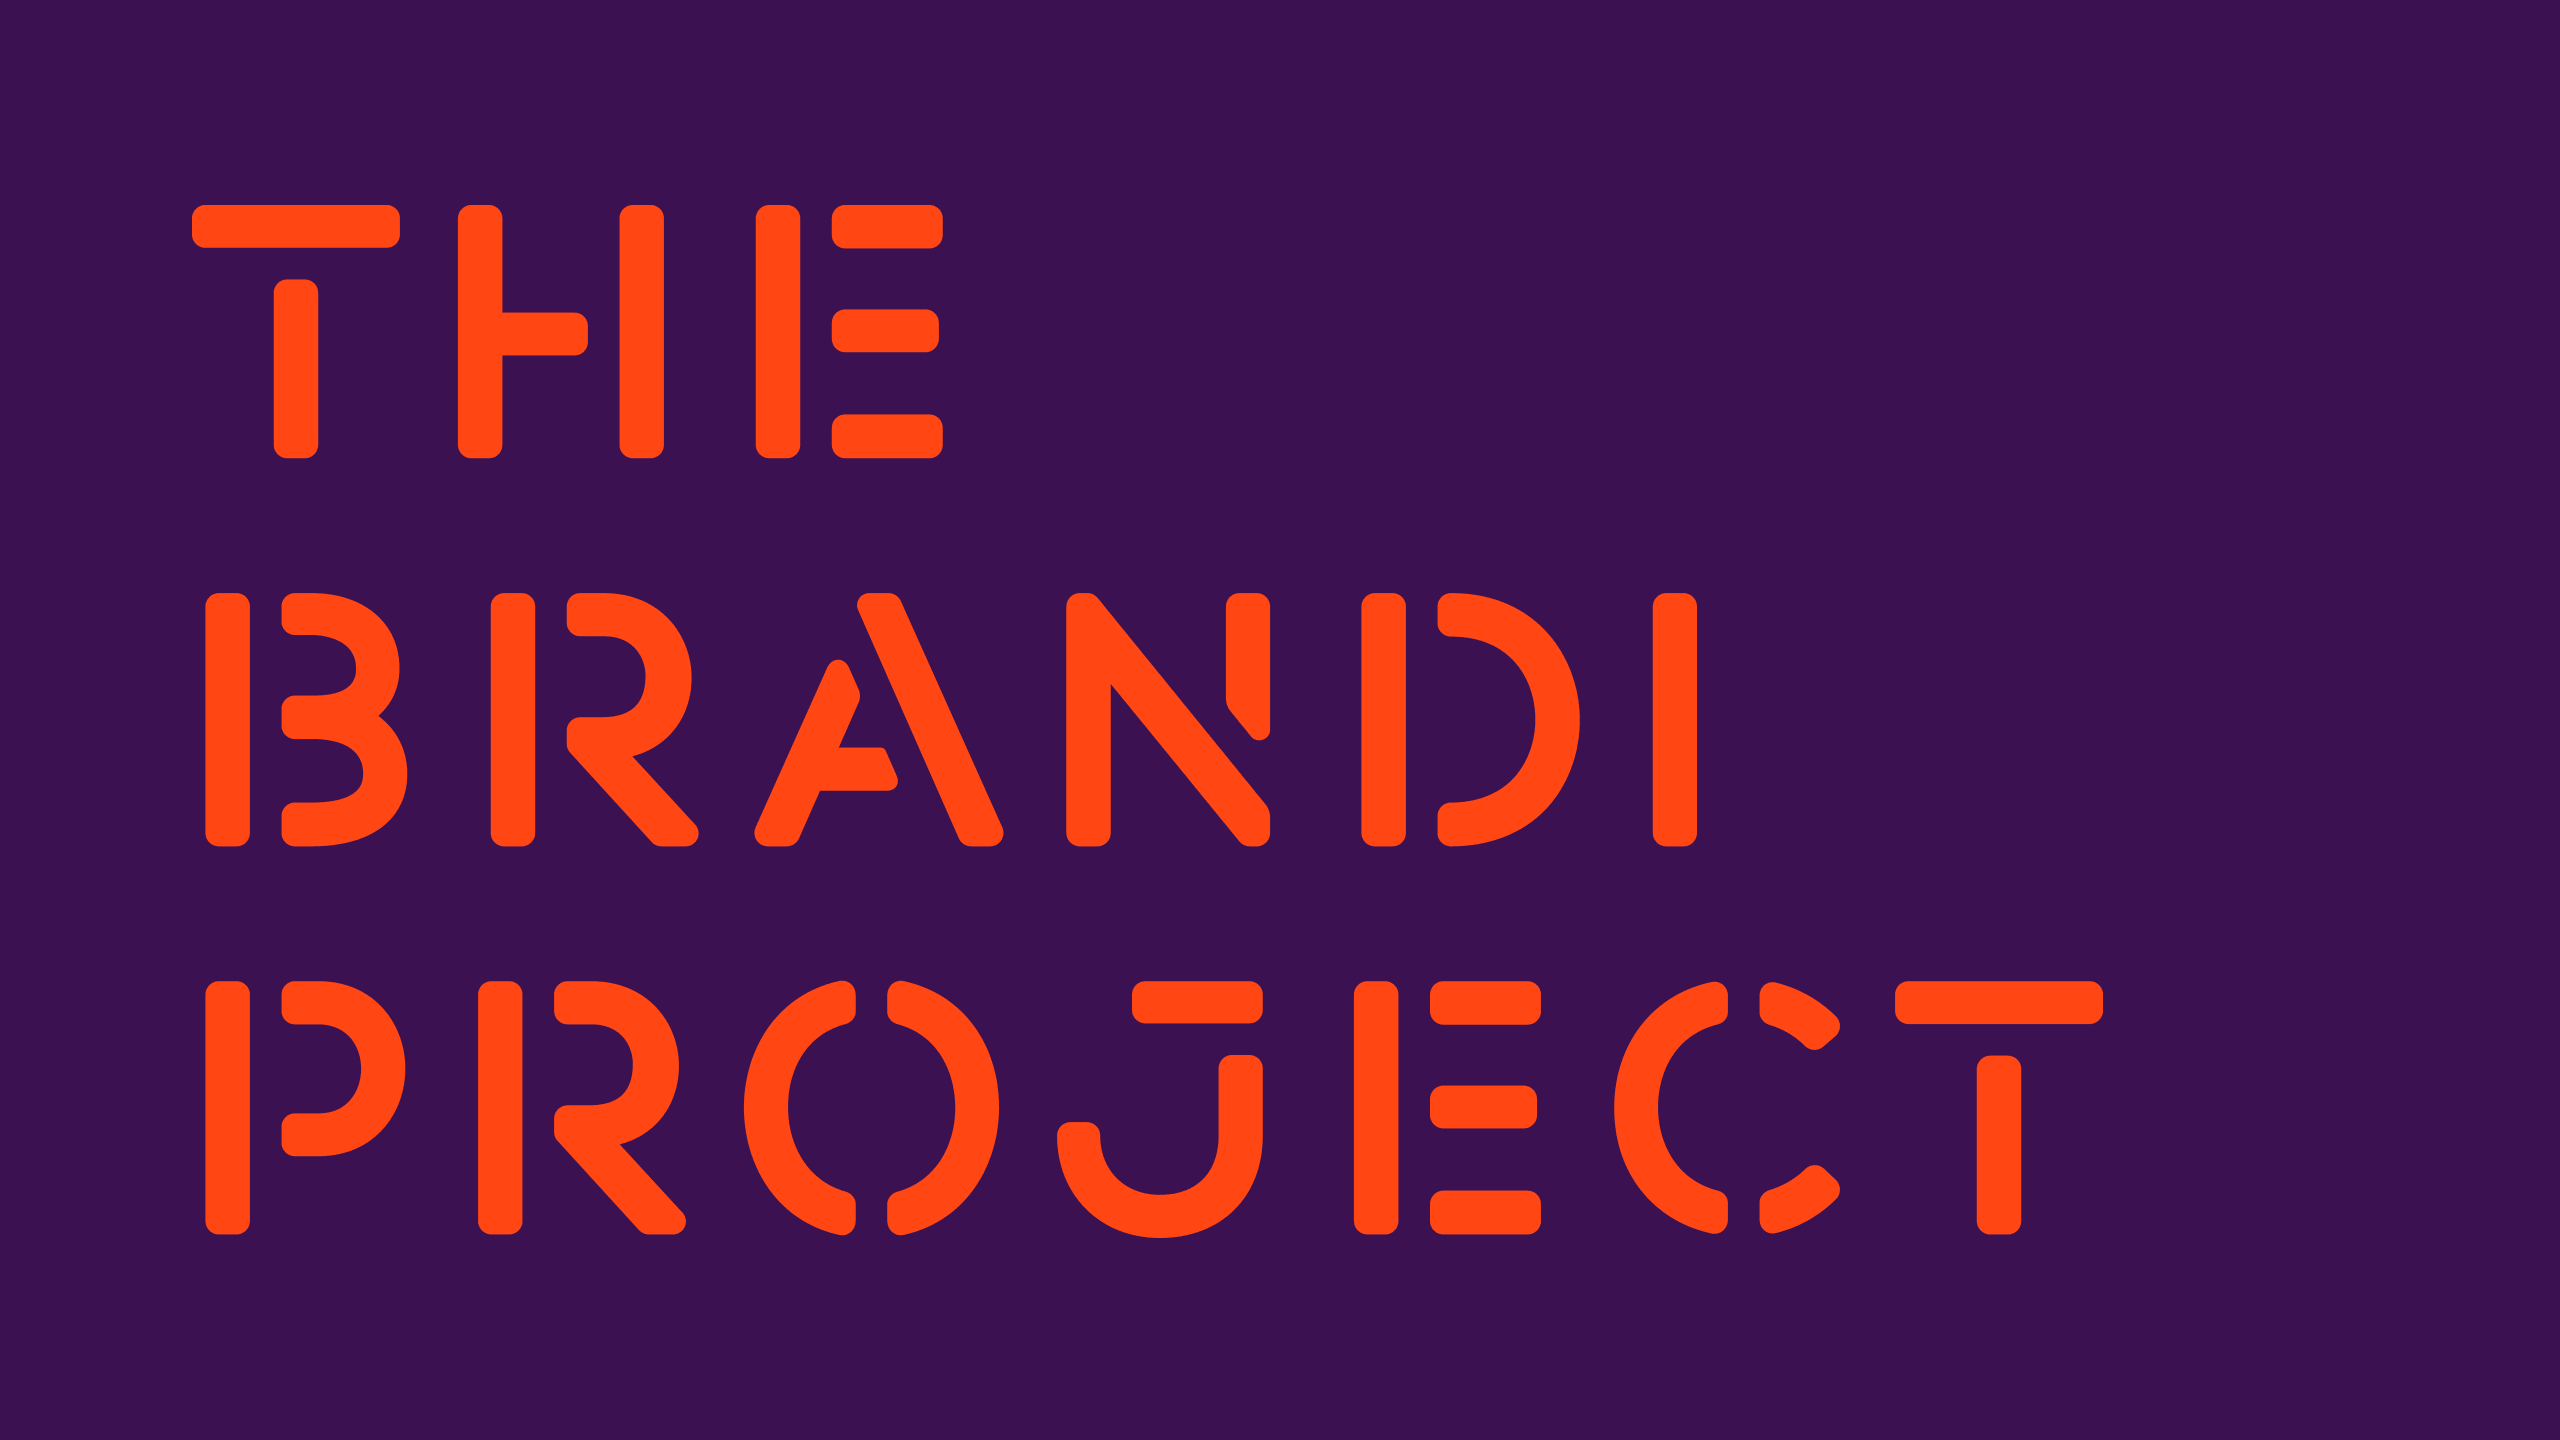 The Brandi Project